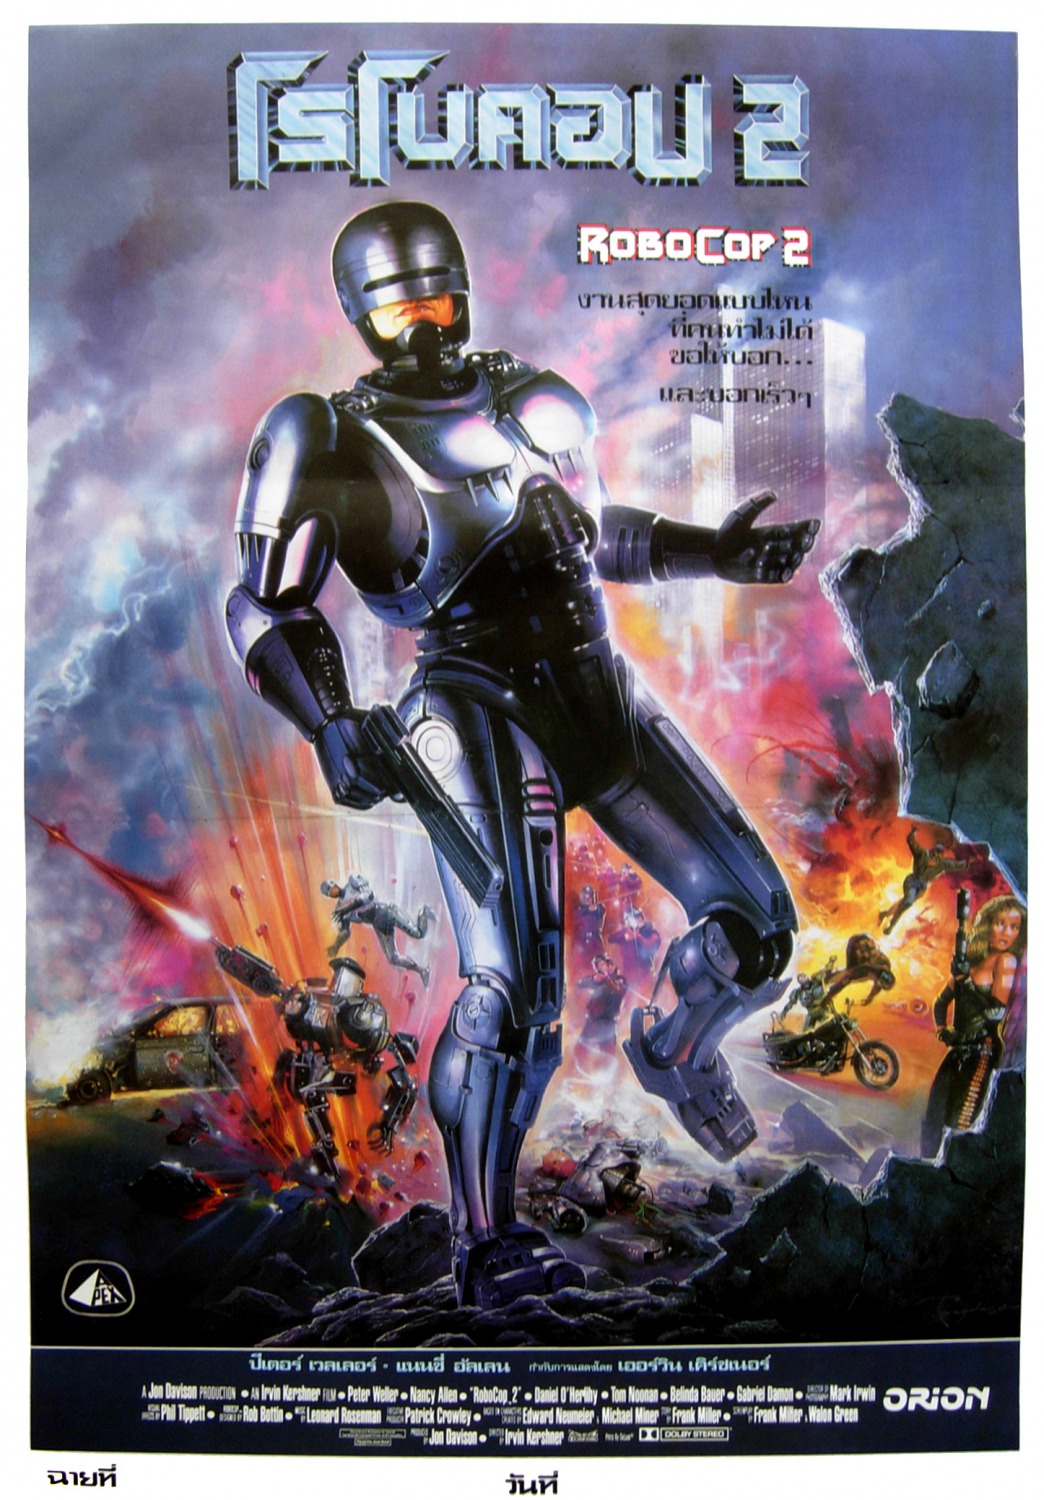 robocop 2022 movie poster